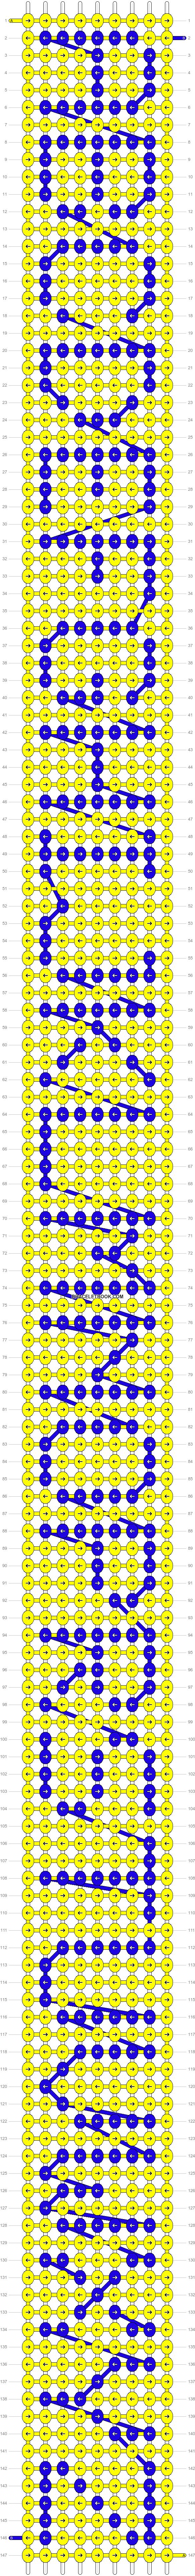 Alpha pattern #9445 variation #72680 pattern